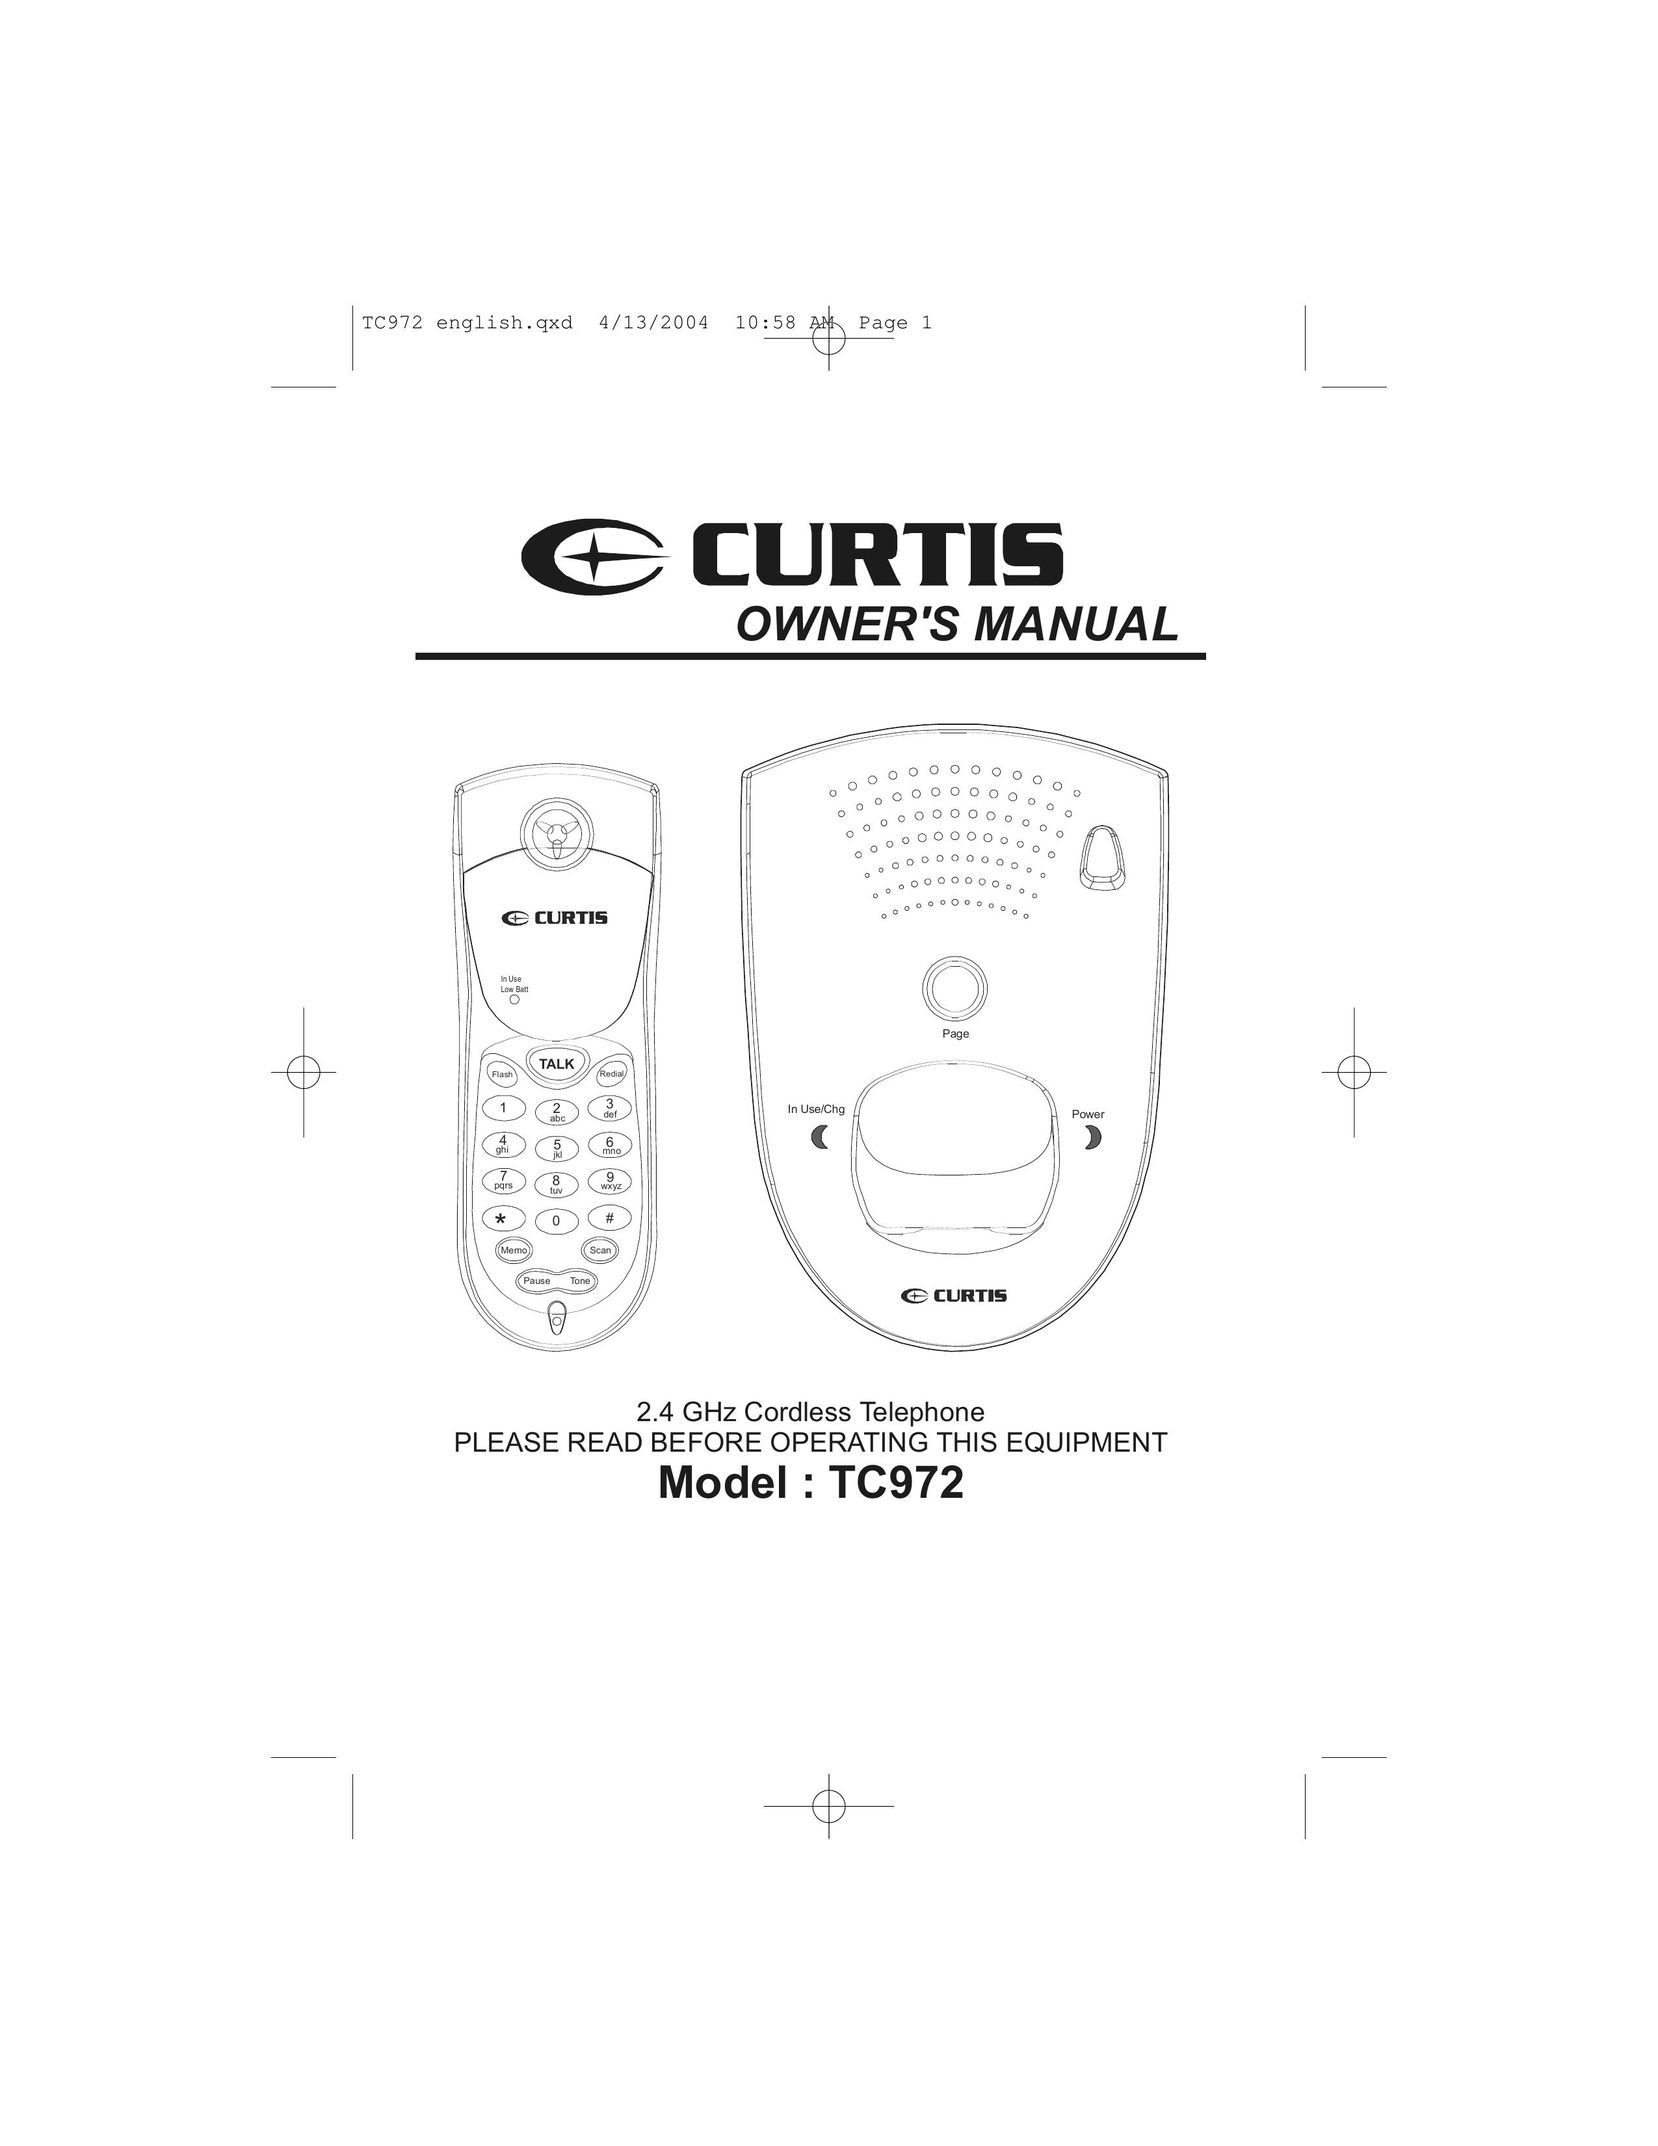 Curtis TC972 Cordless Telephone User Manual